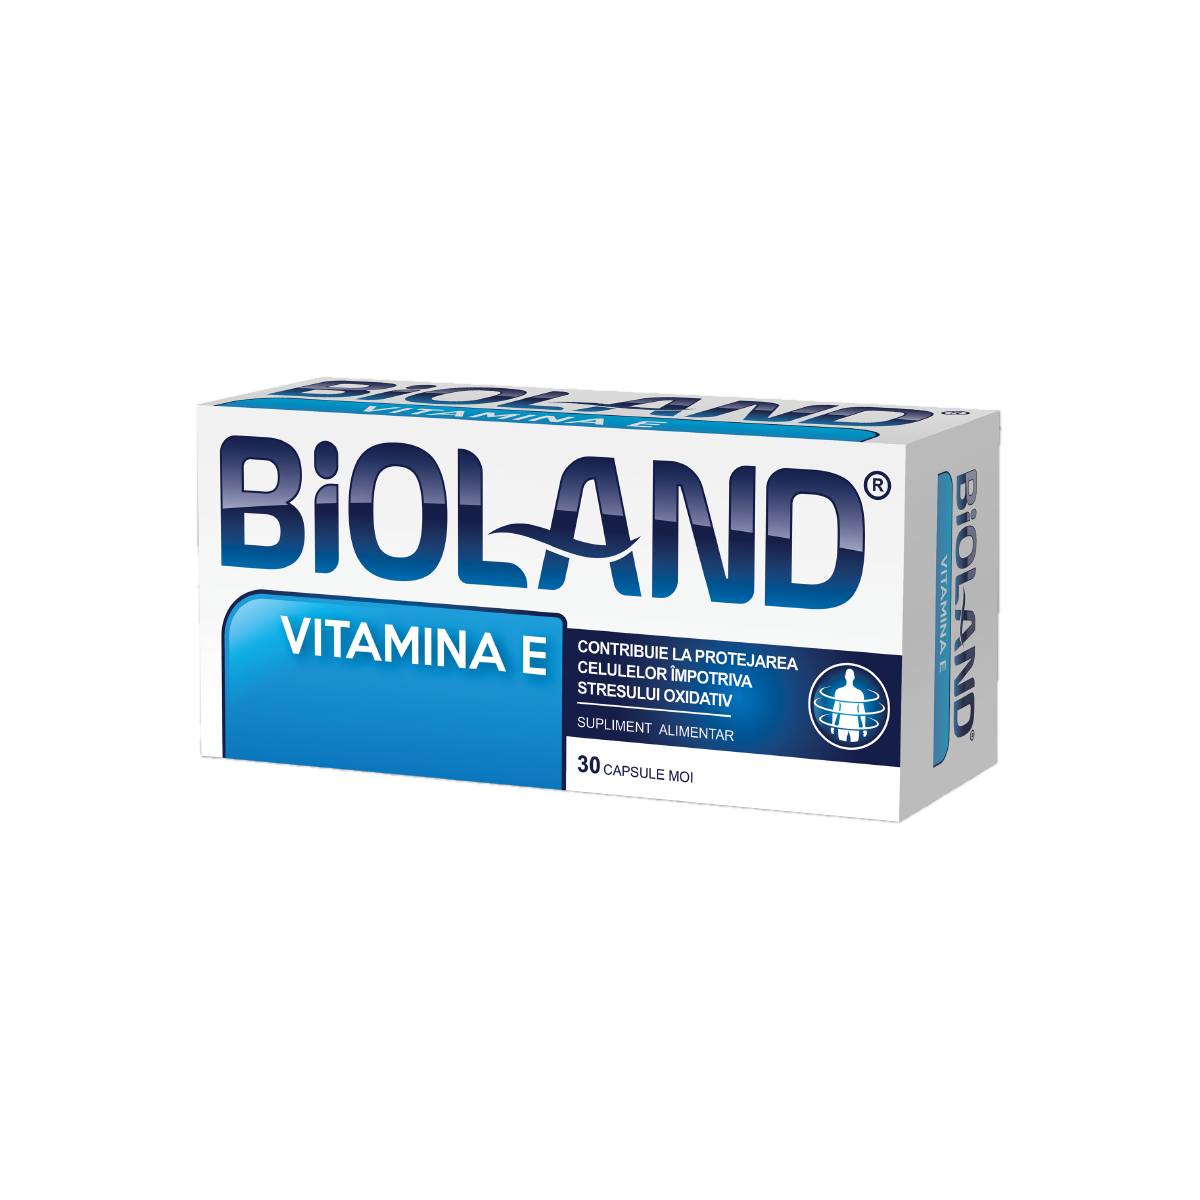 Vitamina E 50mg Bioland, 30 capsule moi, Biofarm